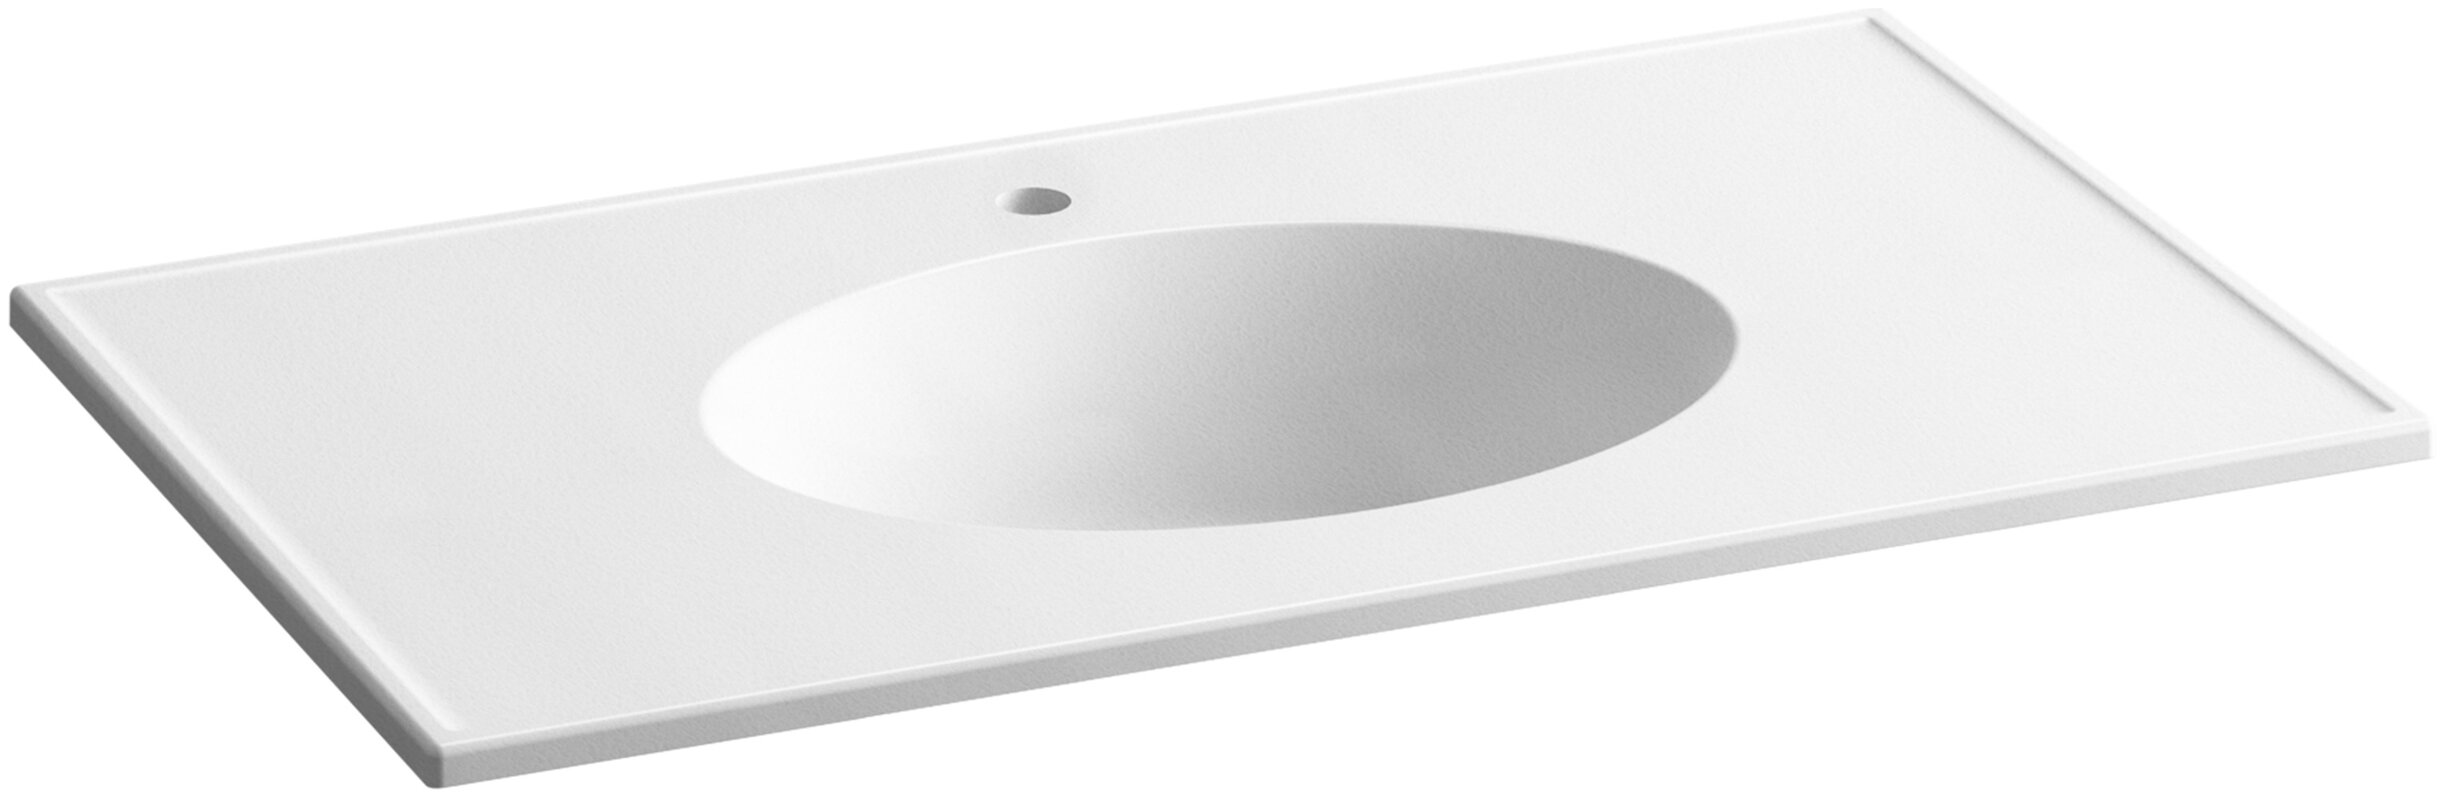 Kohler Ceramic Impressions 37" Console Bathroom Sink with Overflow